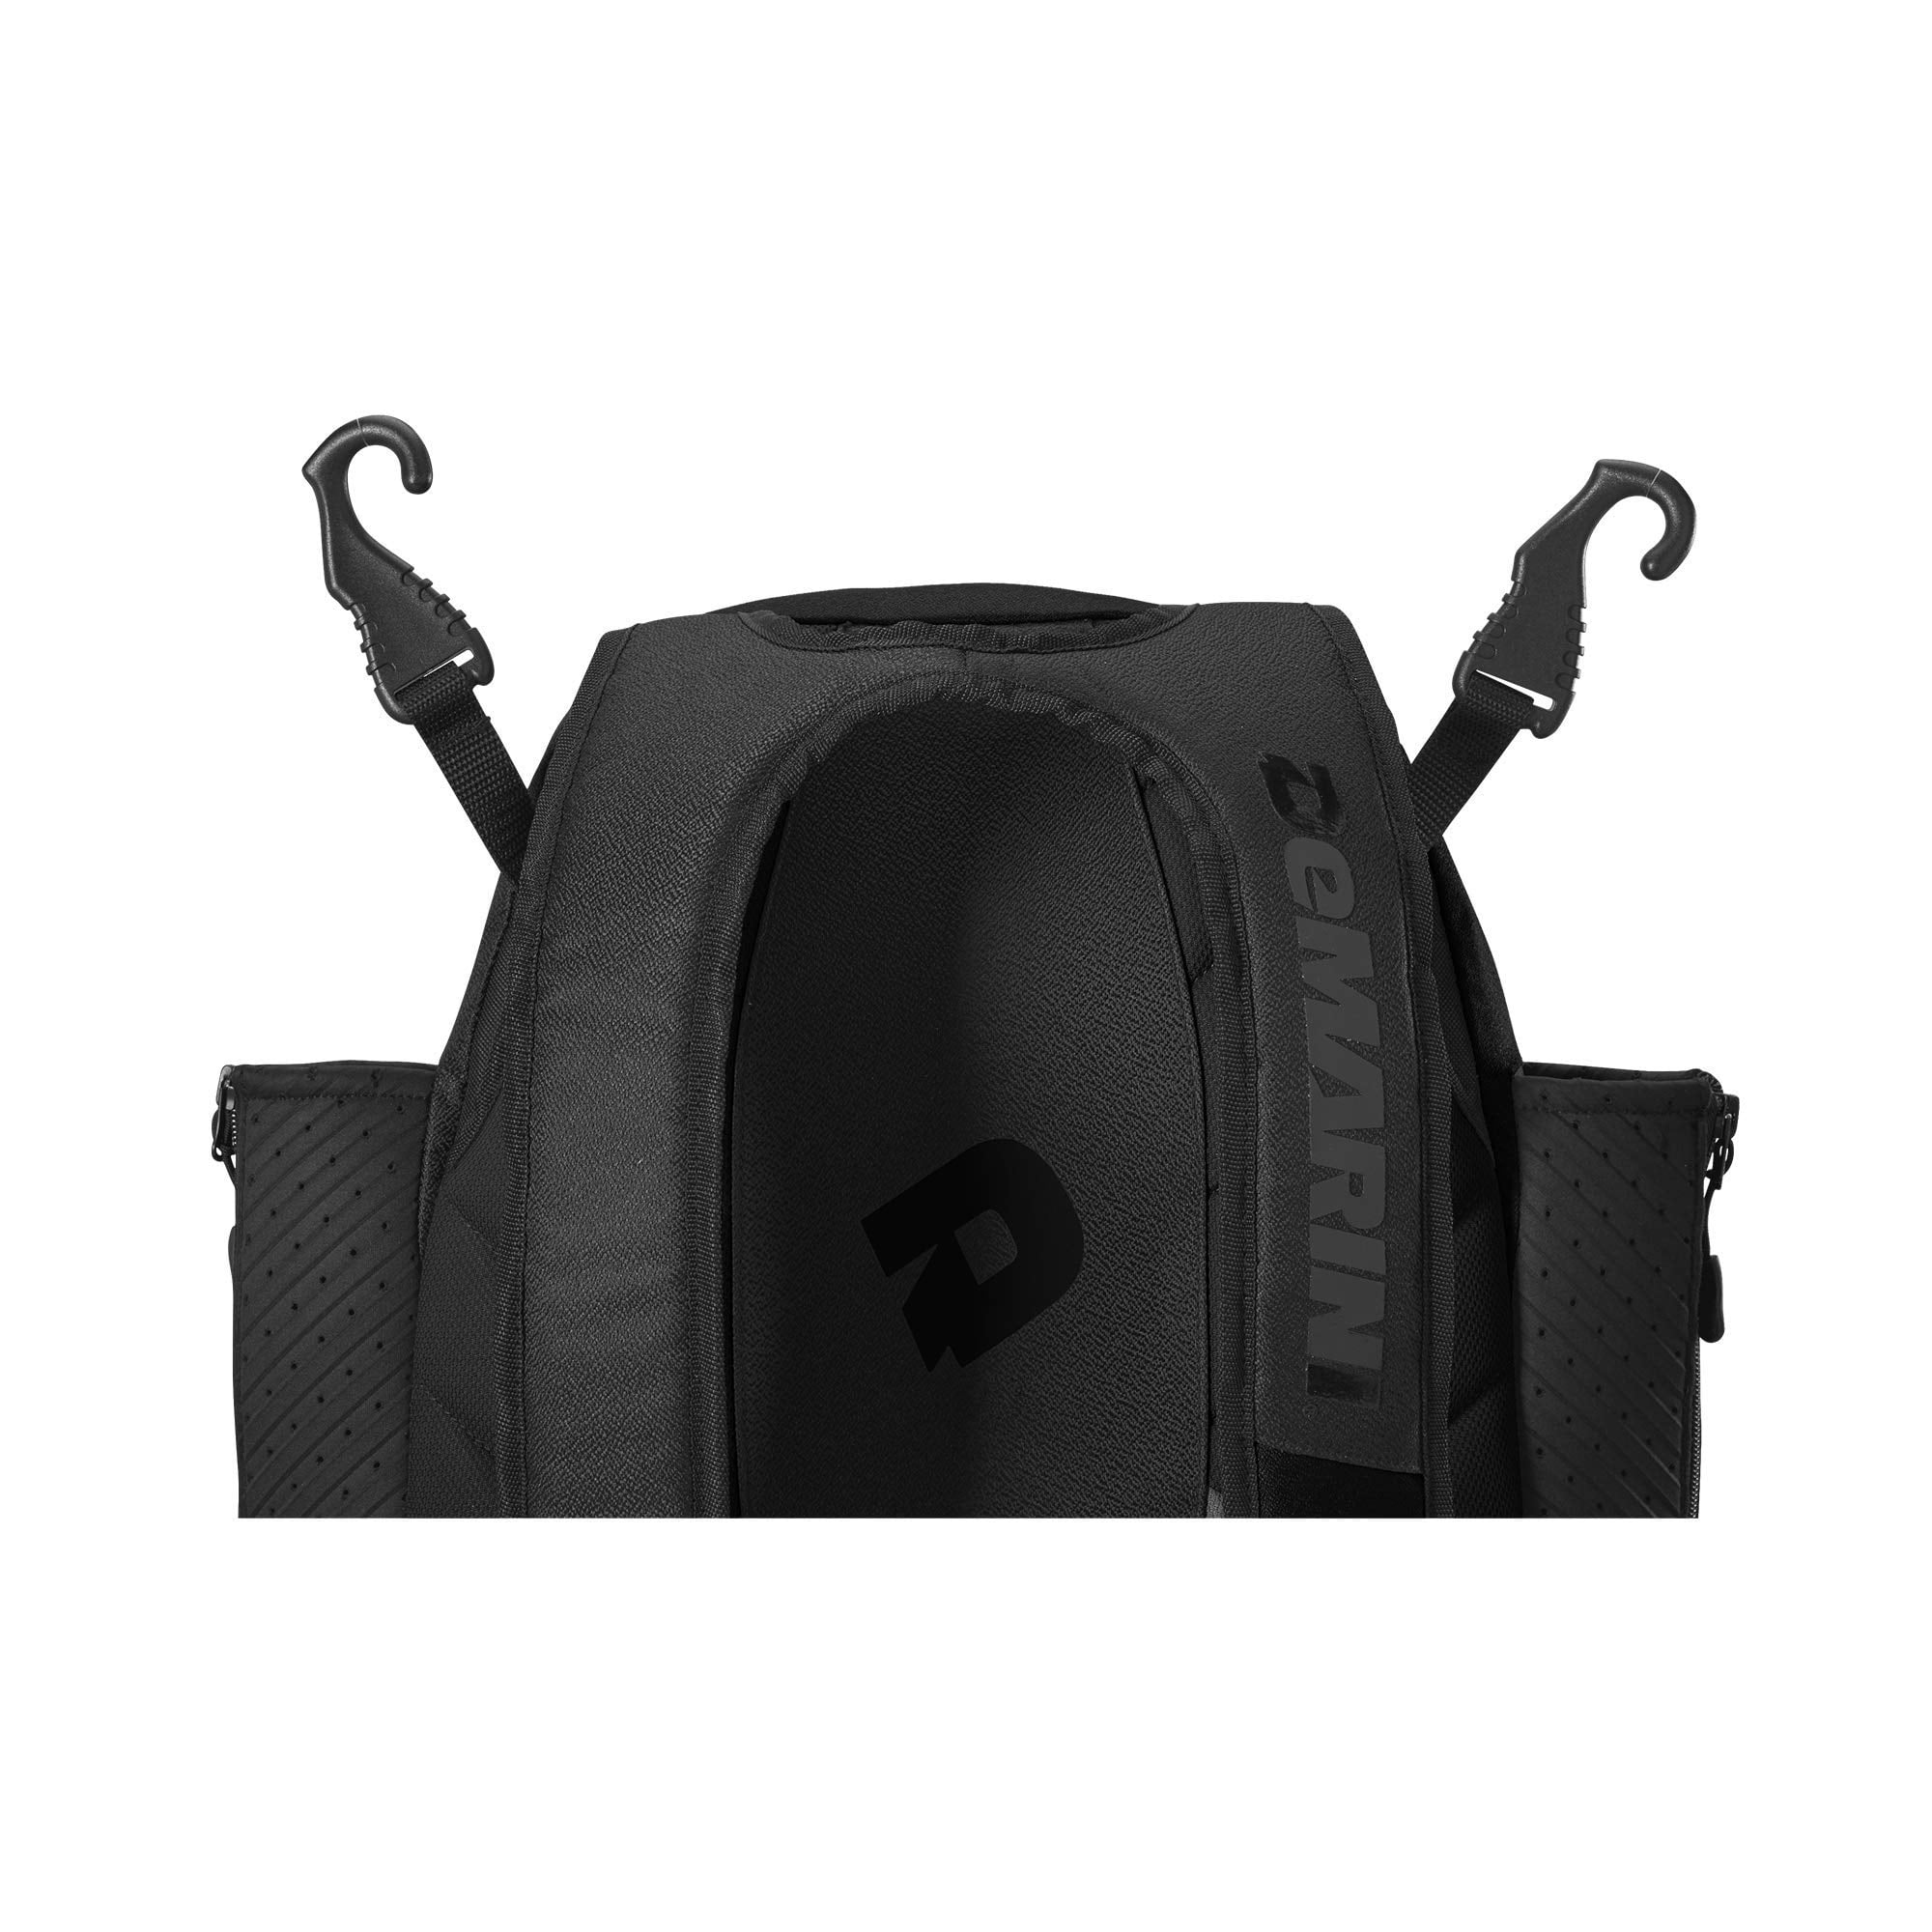 Amazon.com : DeMarini Voodoo OG Baseball Backpack - Black : Sports &  Outdoors